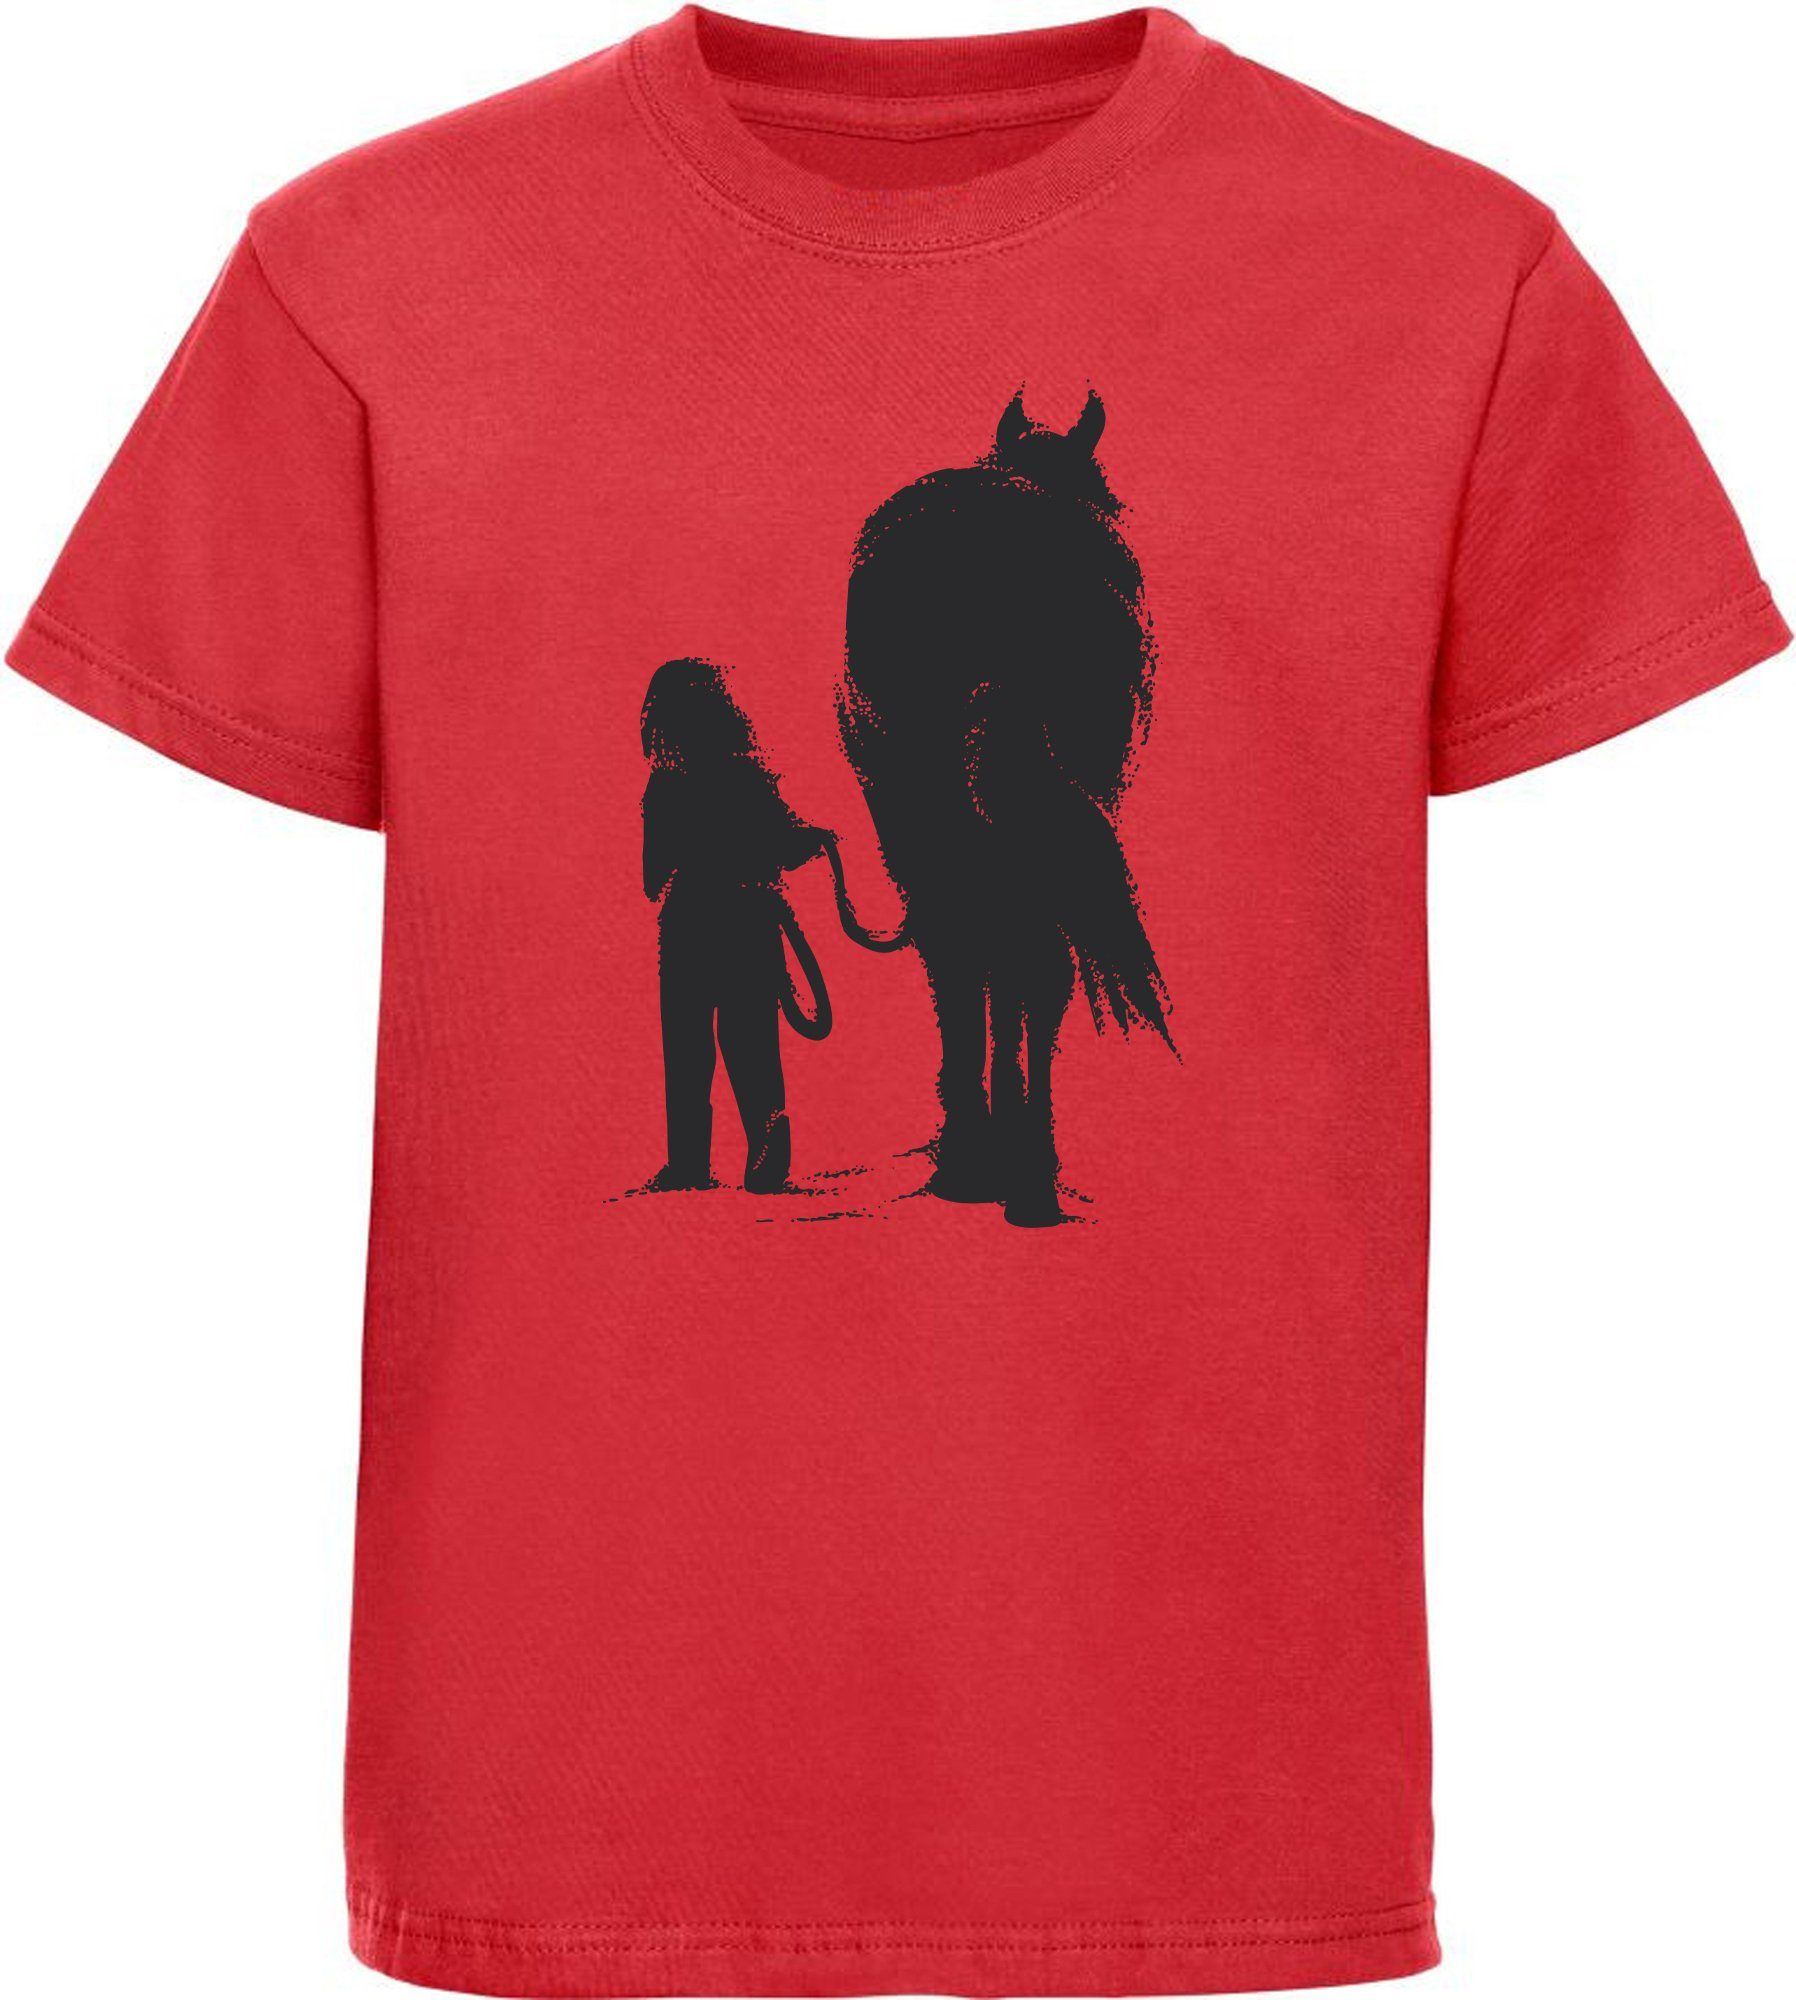 MyDesign24 T-Shirt Kinder Print Shirt bedruckt - Mädchen & Pferd beim Spaziergang Baumwollshirt mit Aufdruck, i250 rot